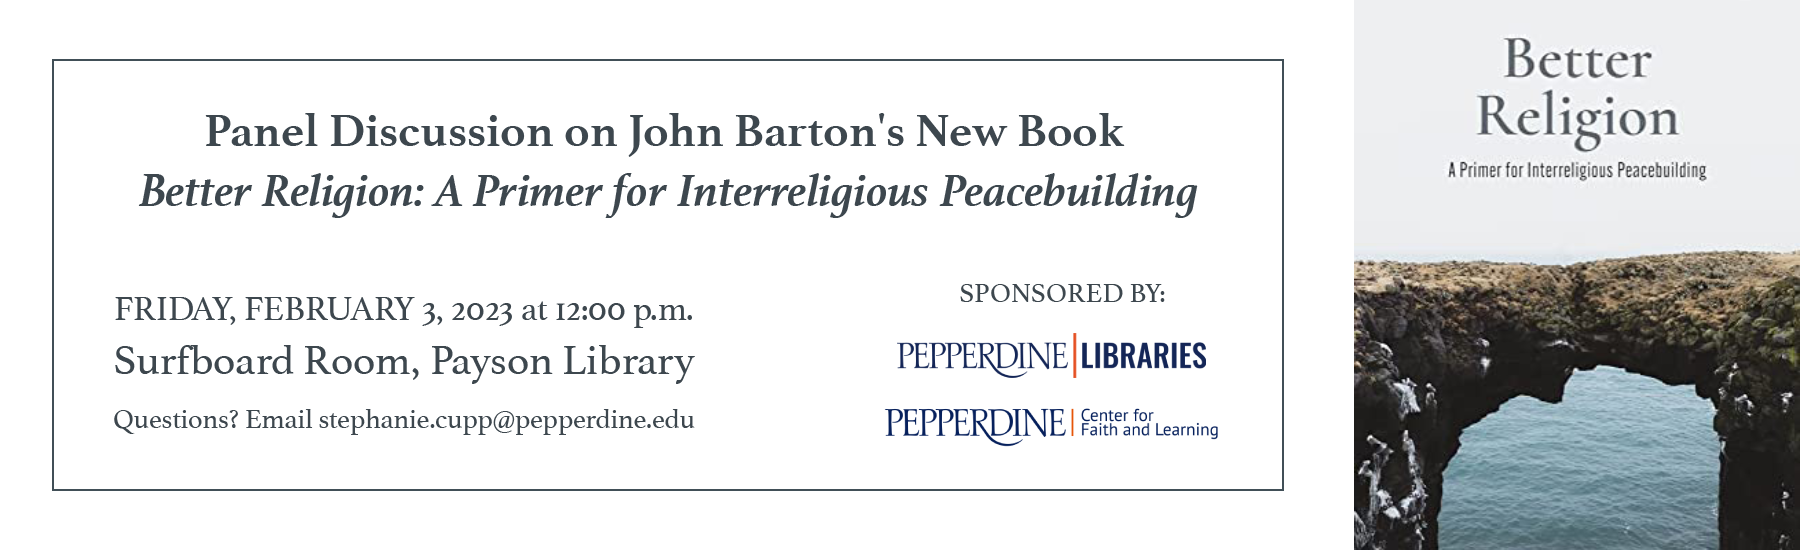 Panel discussion on John Barton's new book